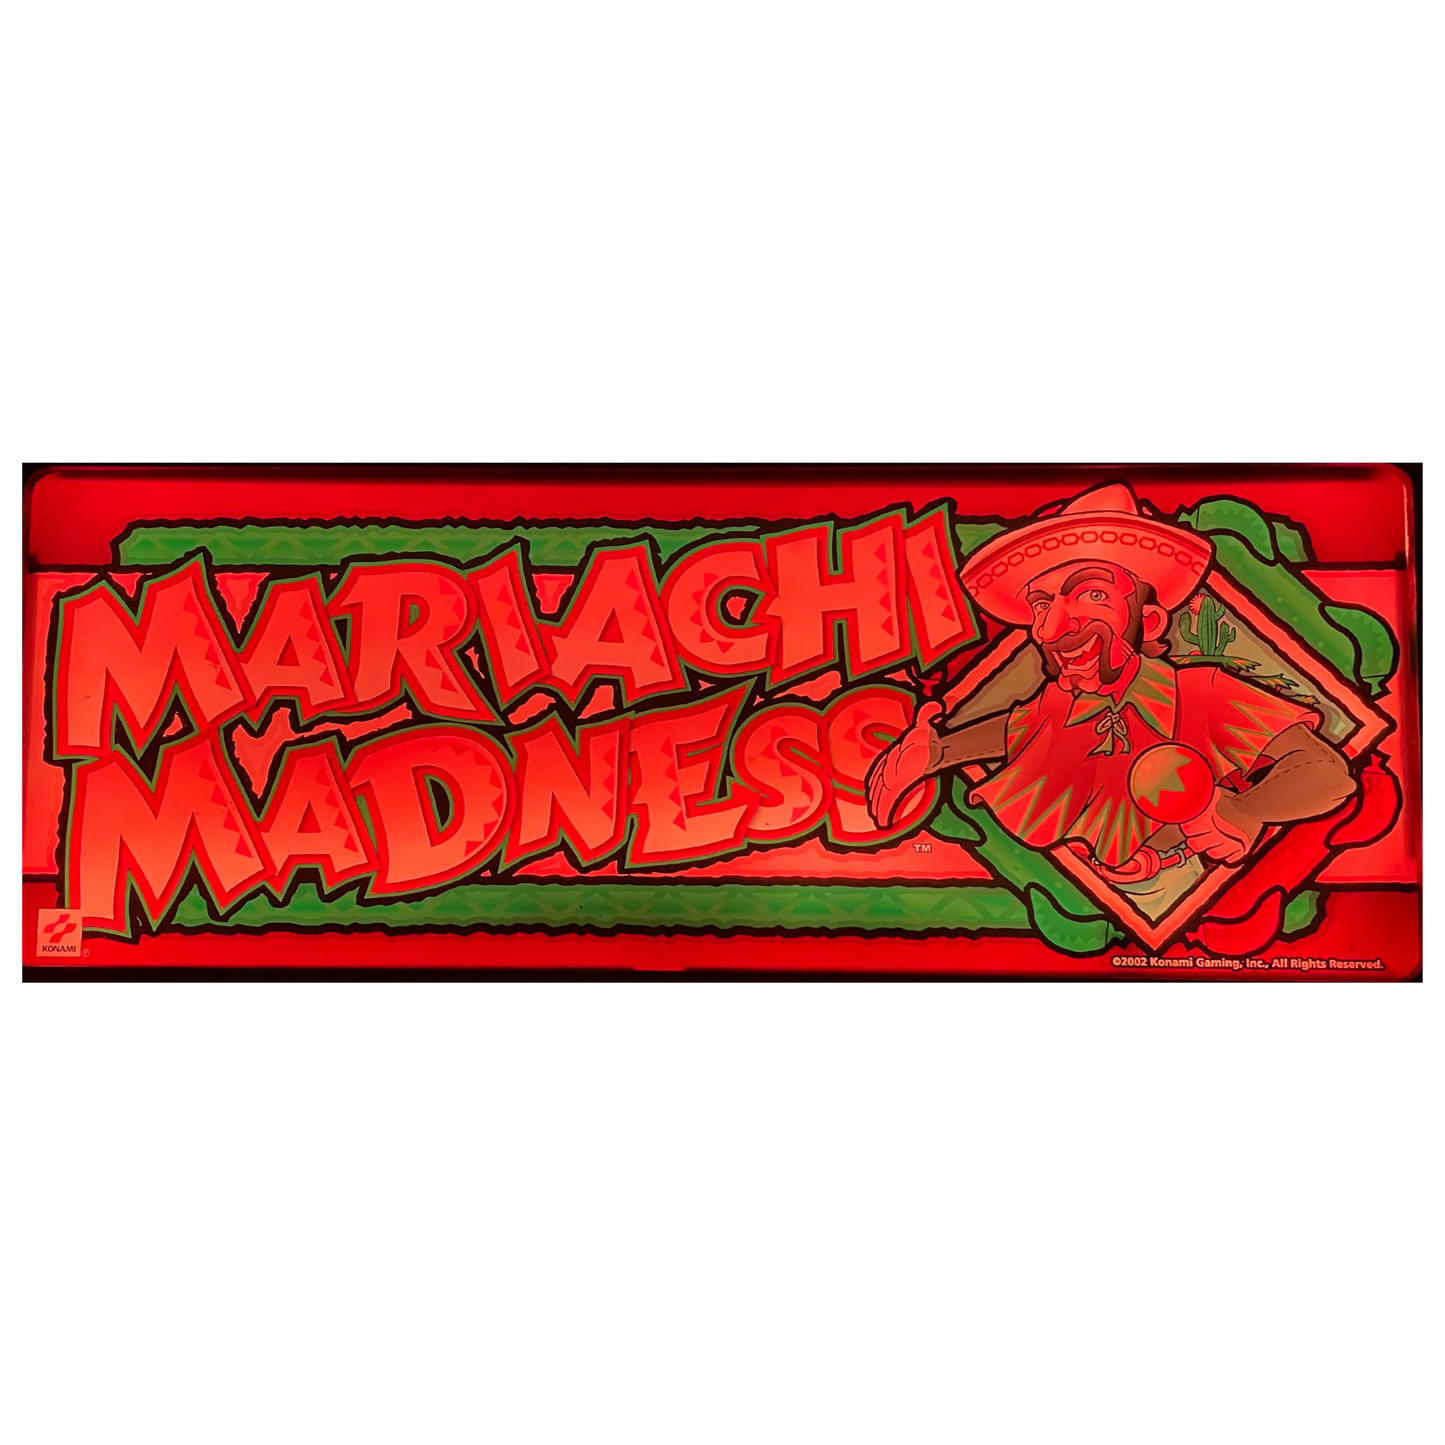 Mariachi Madness Slot Glass